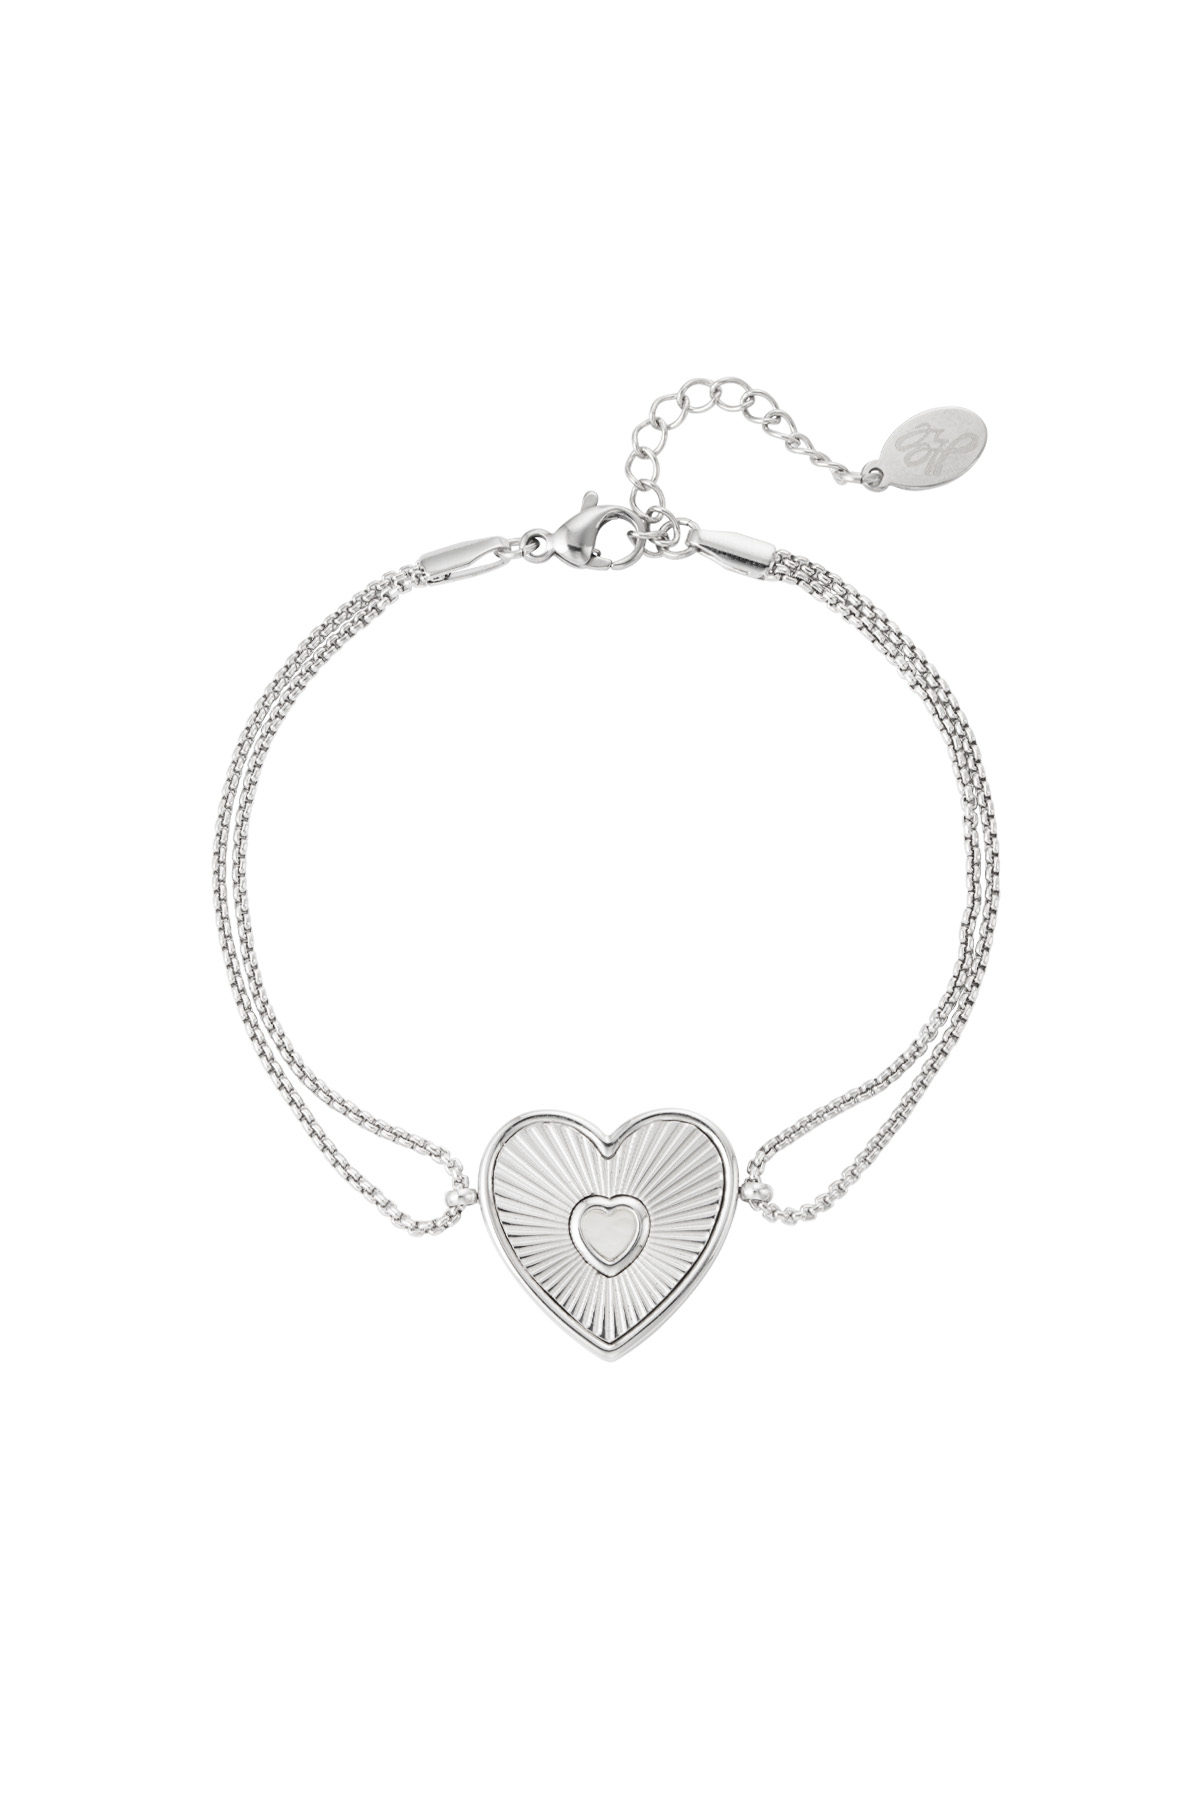 Bracelet lover heart - silver 